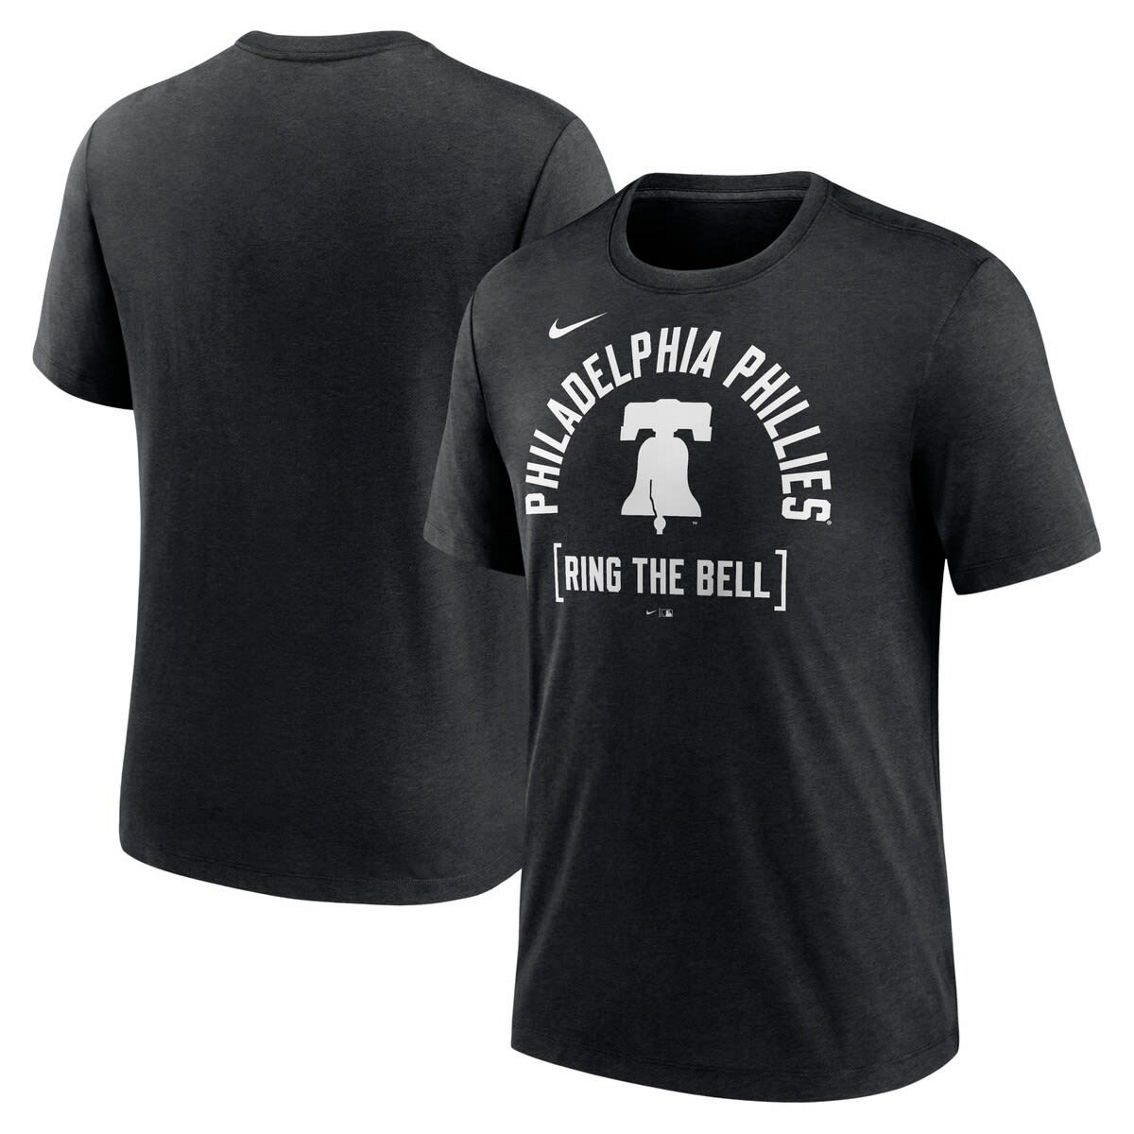 Nike Men's Heather Black Philadelphia Phillies Swing Big Tri-Blend T-Shirt - Image 2 of 4